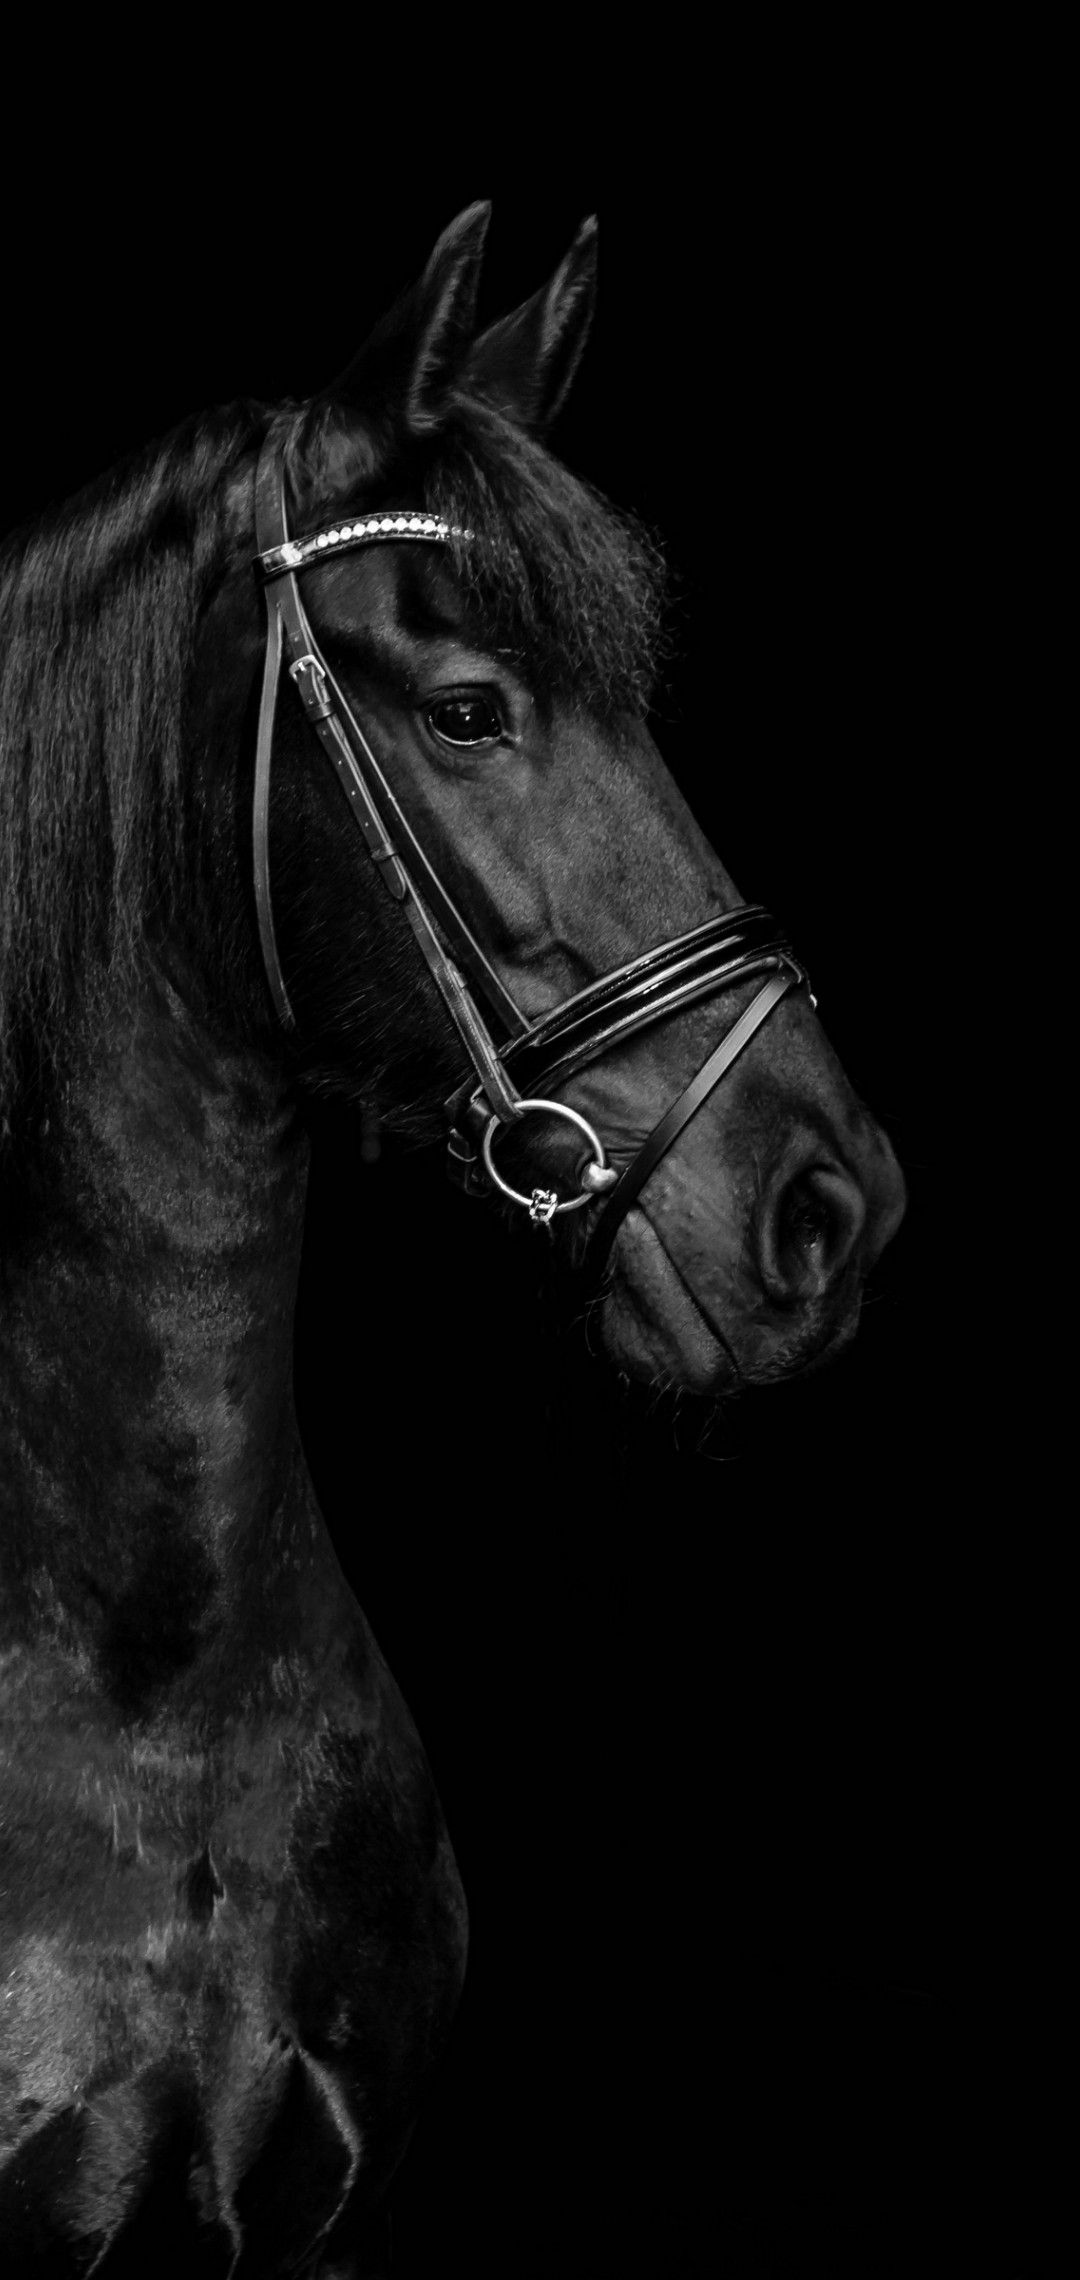 Black horse wallpaper. Horse wallpaper, Horses, Black horse